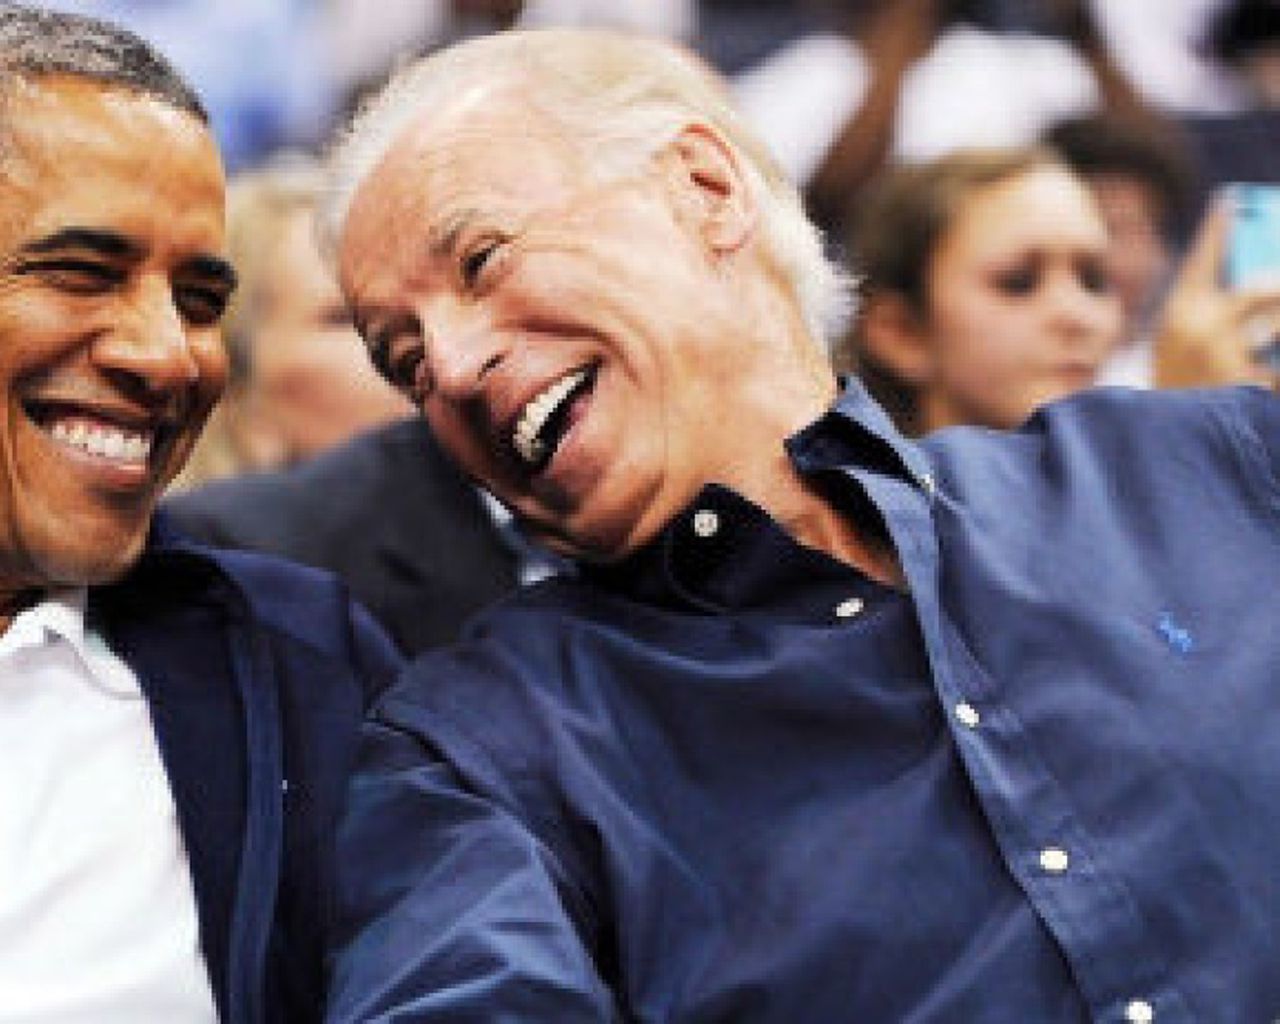 Joe Biden memes aim to get last laugh on Trump